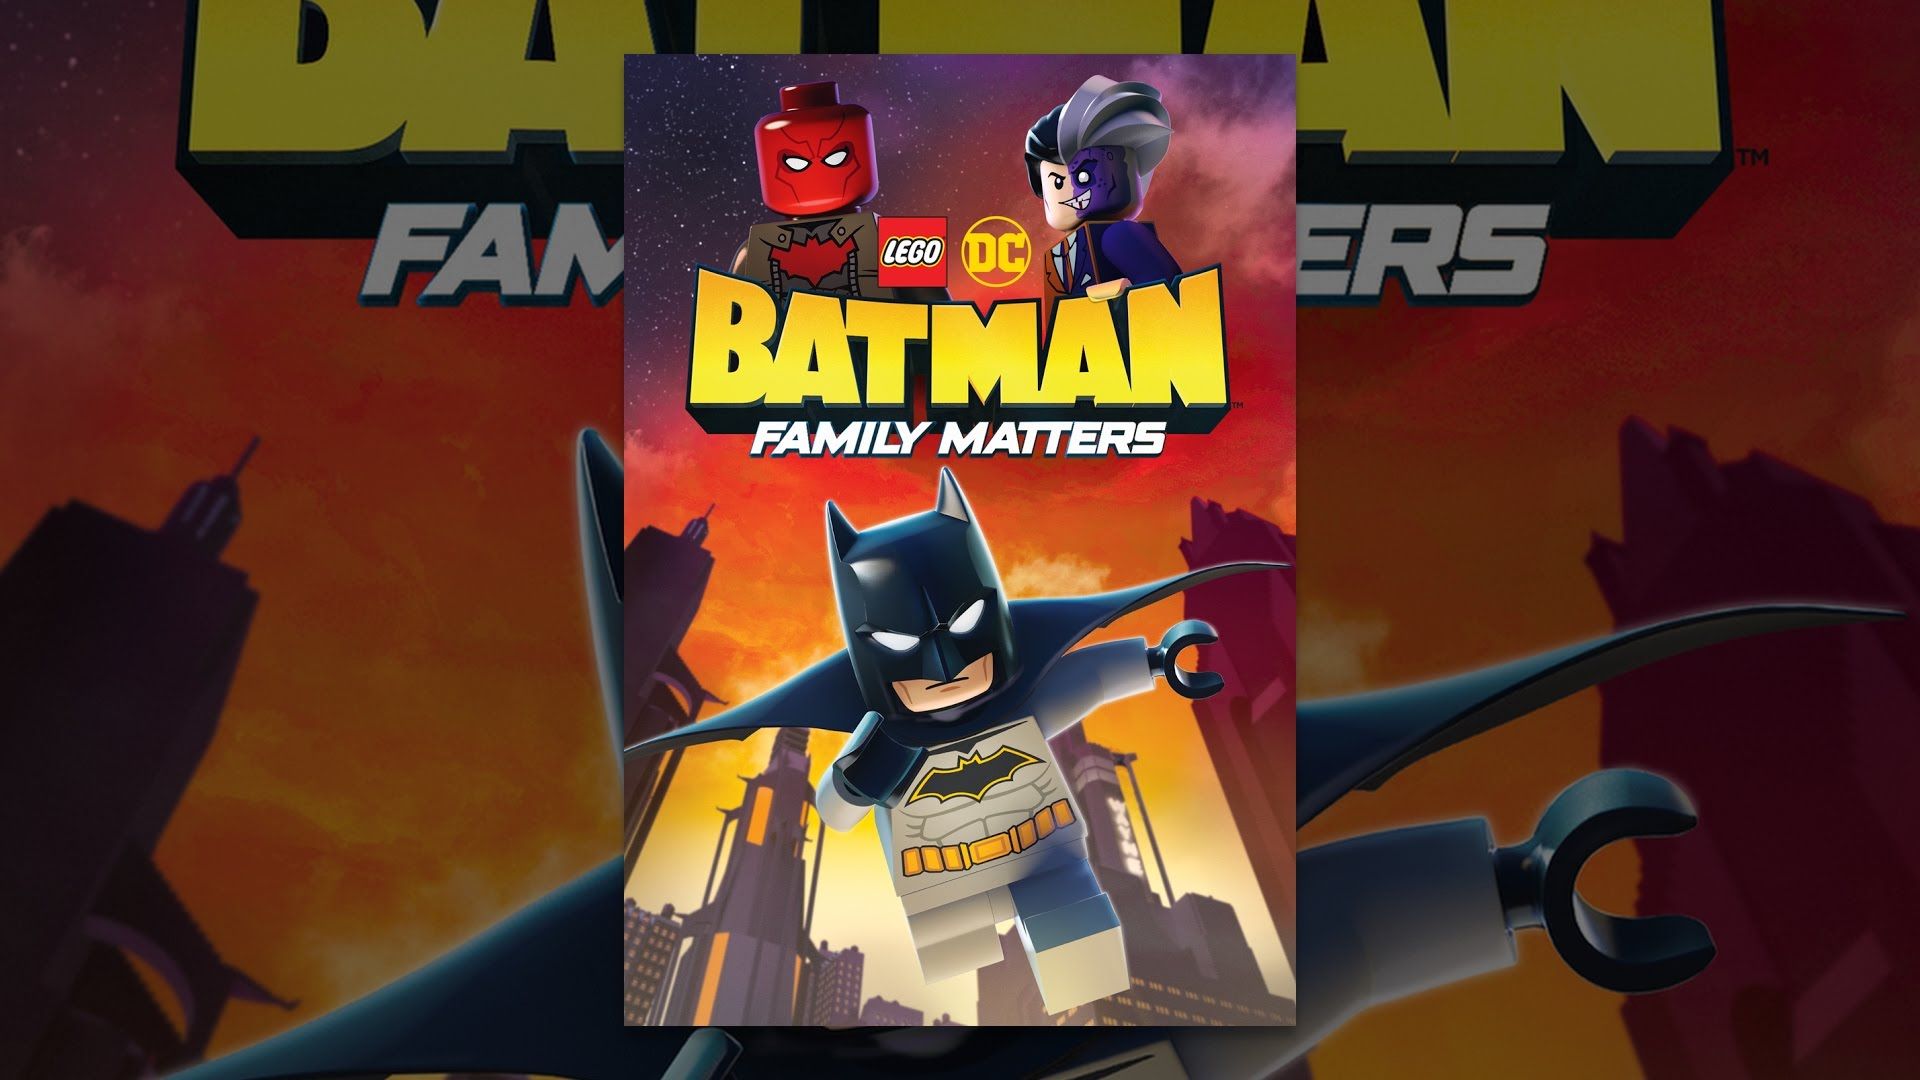 LEGO DC: Batman: Family Mattersm.youtube.com